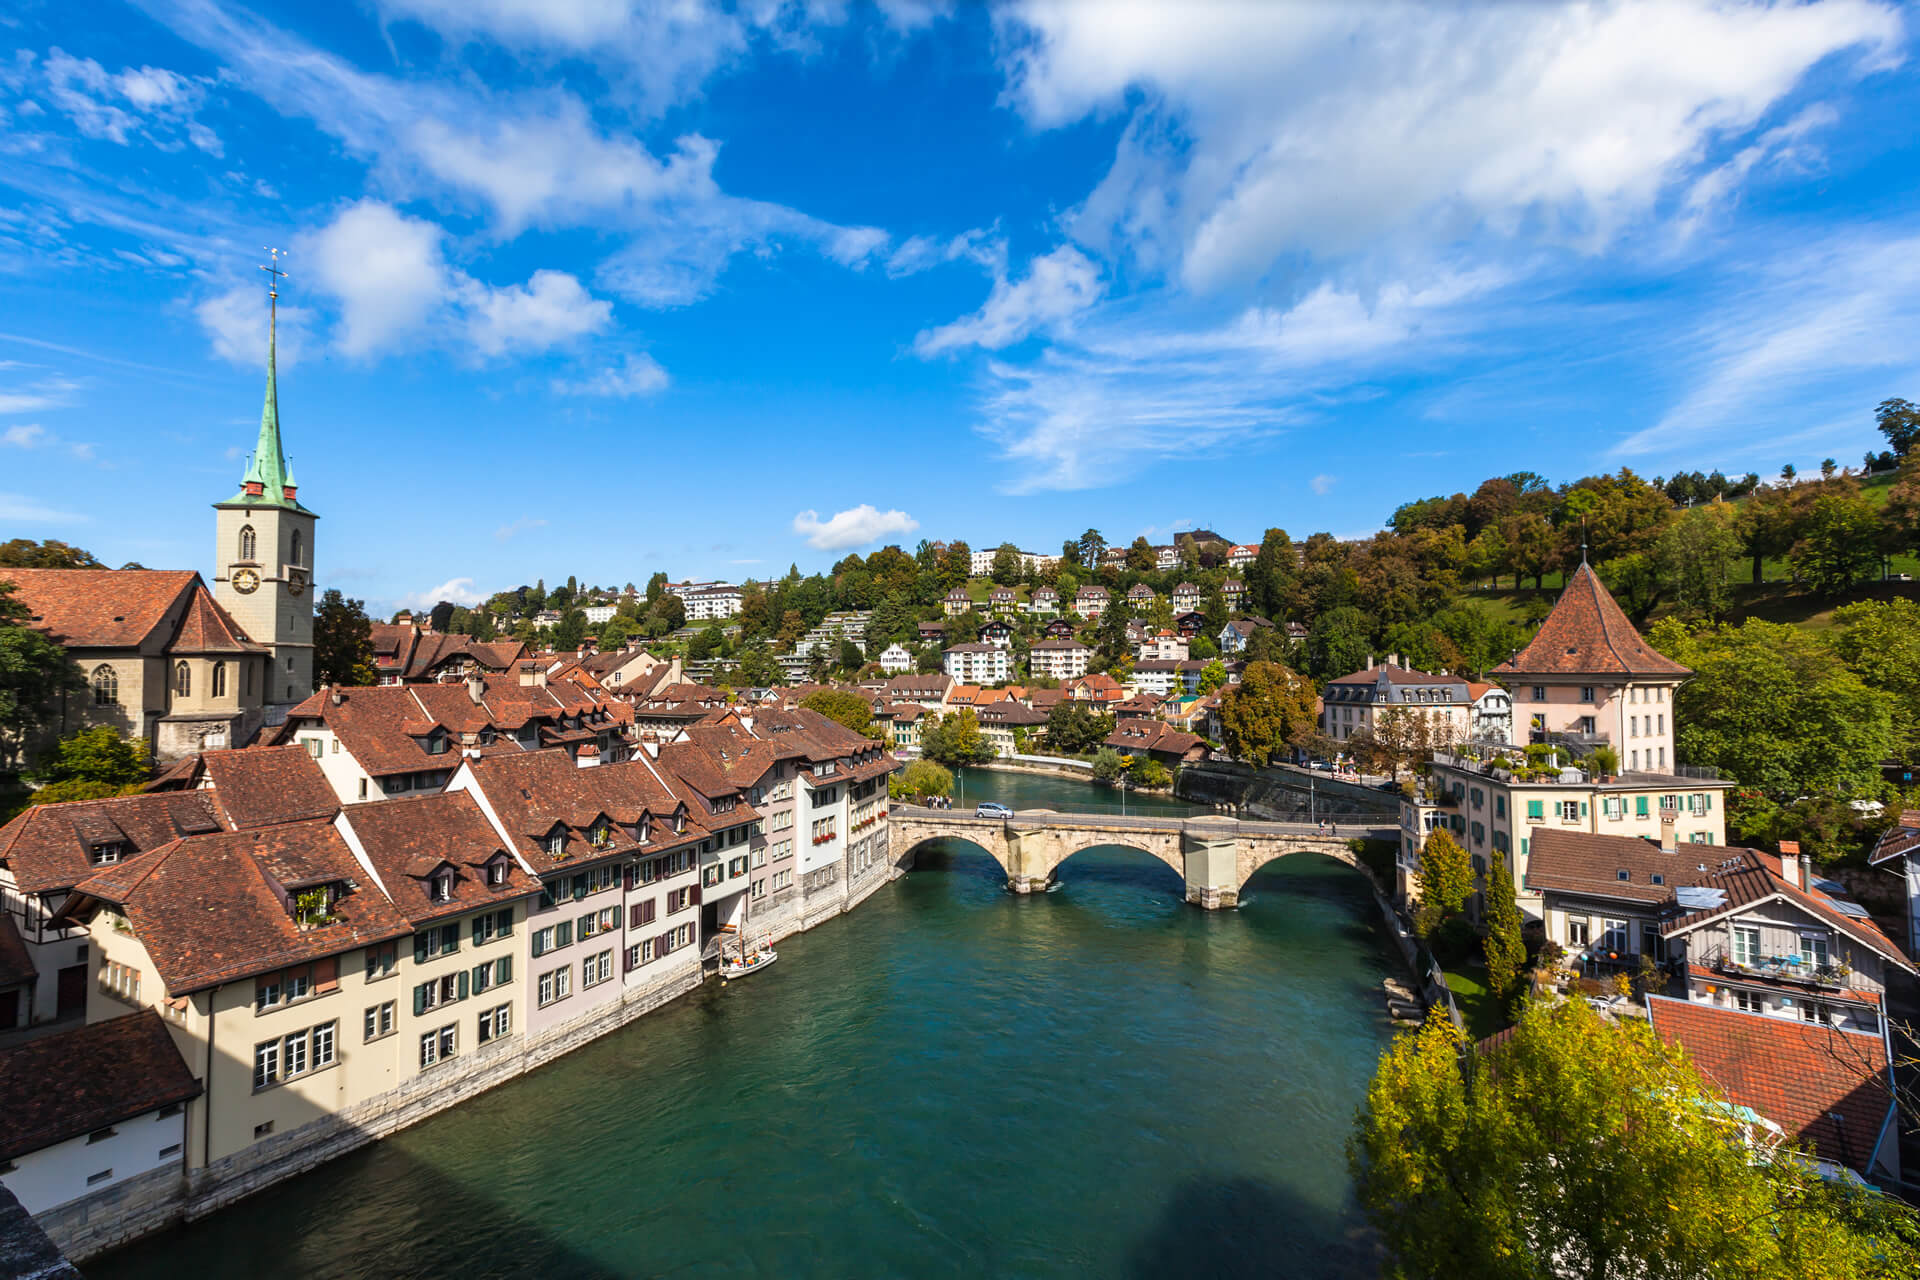 The Old City of Berne on Bridge in Switzerland